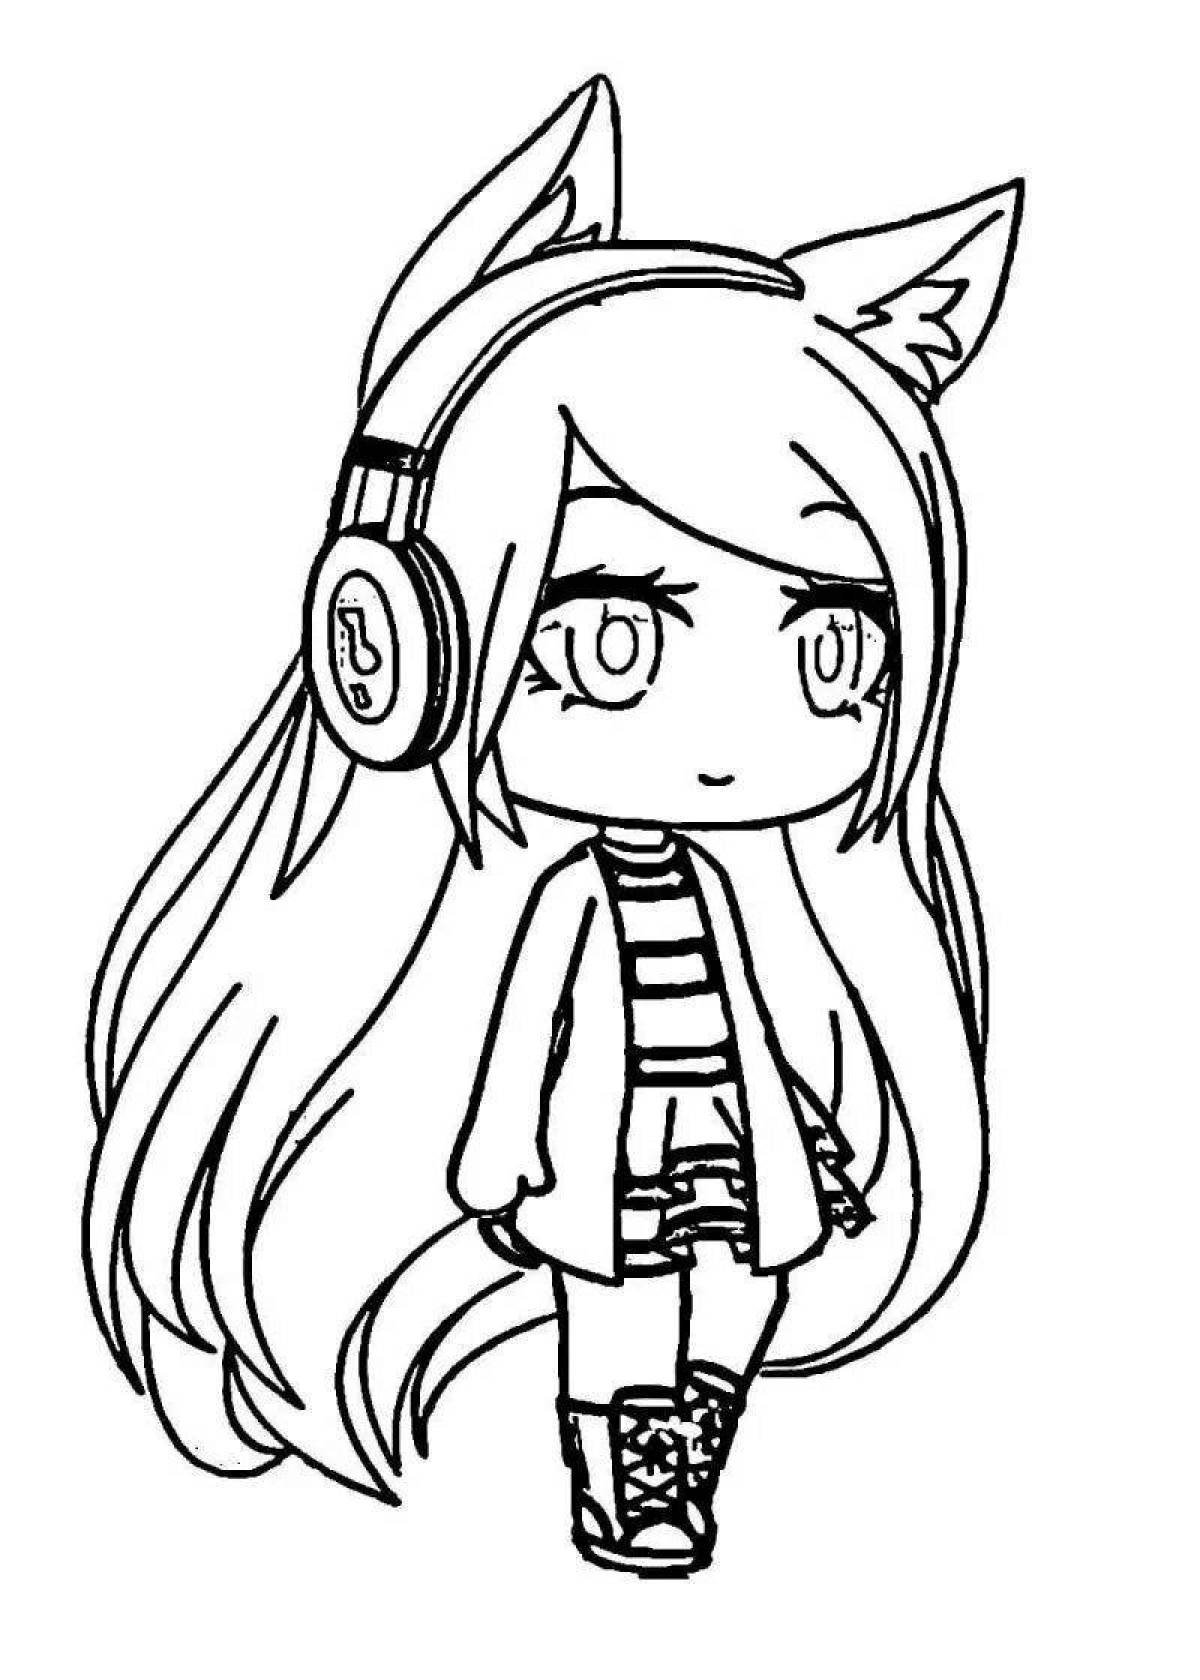 Energetic coloring girl with headphones